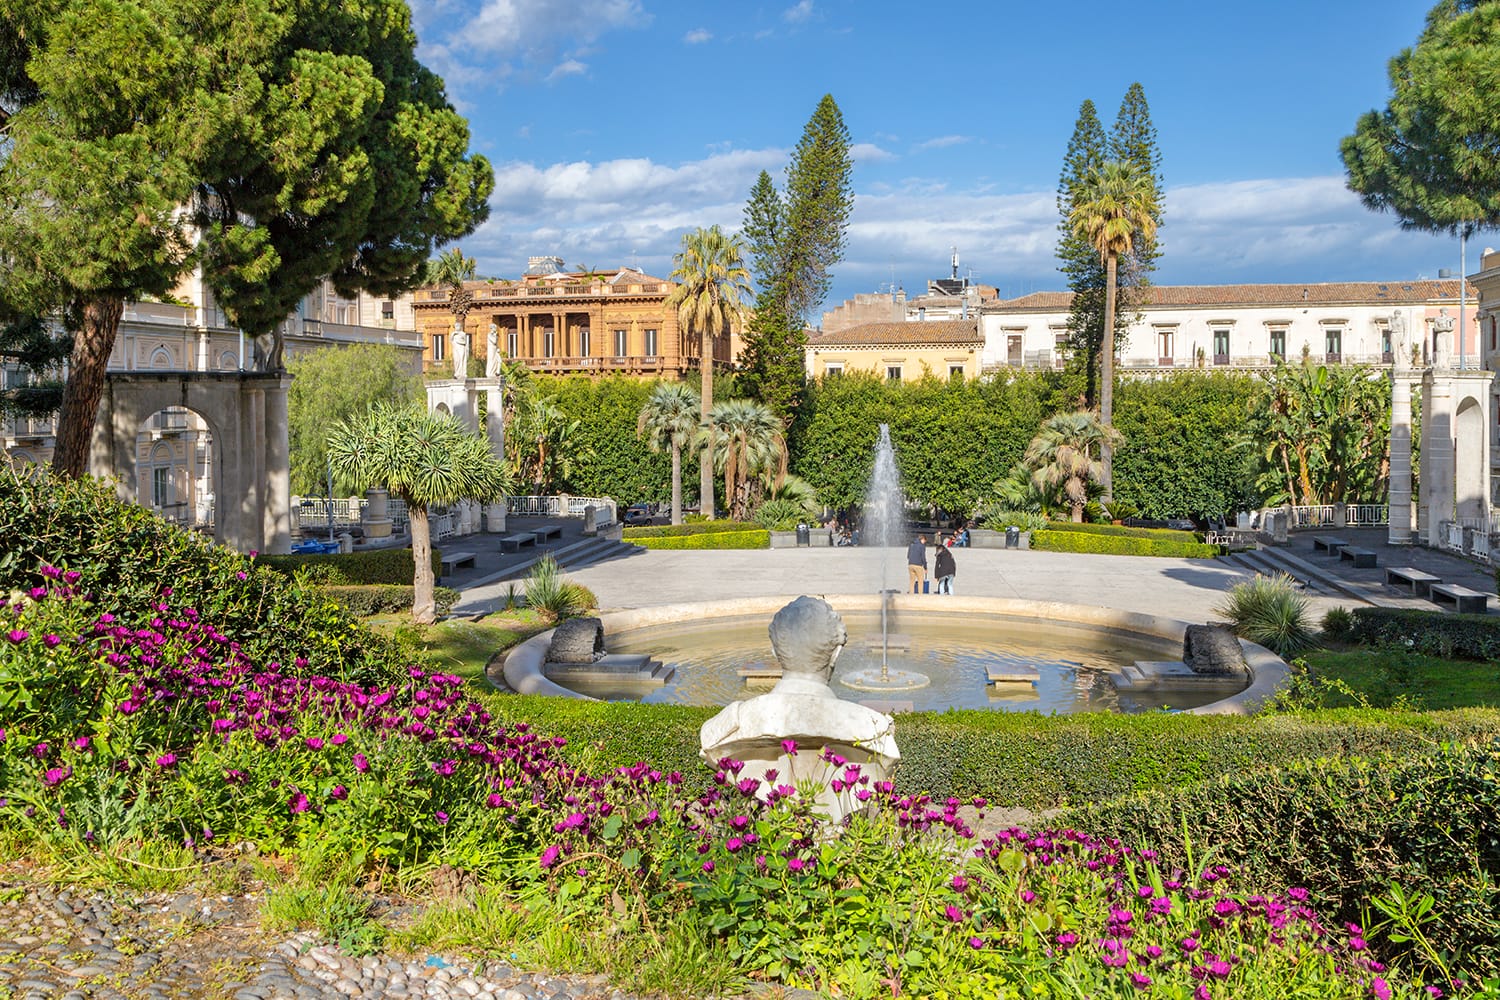 Giardino Bellini park in Catania, Sicily, Italy